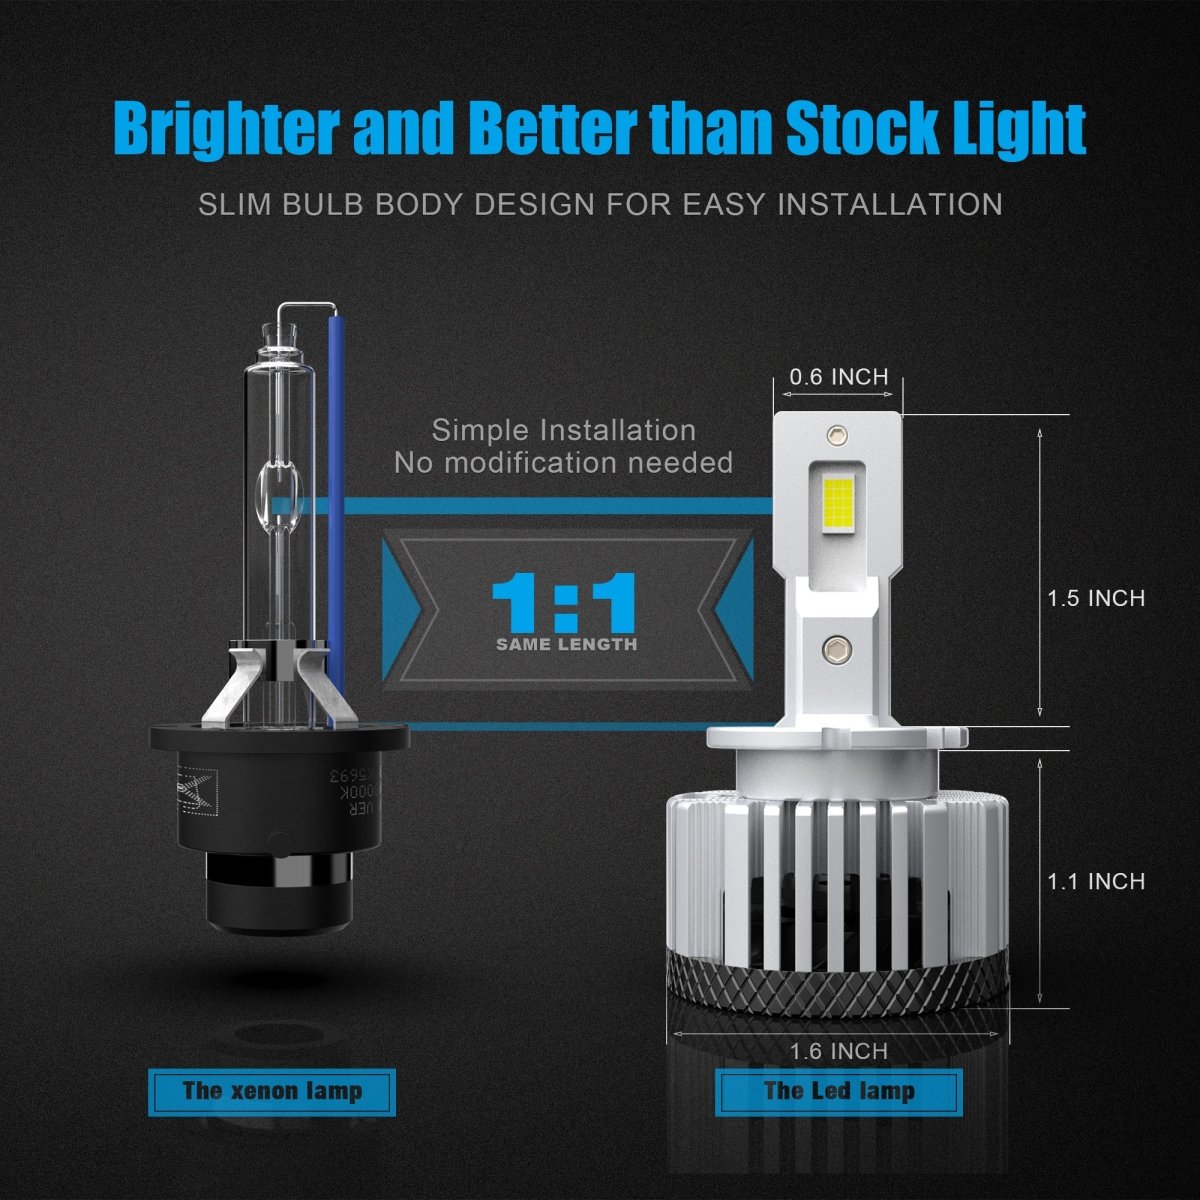 D2S D2R LED Headlights Bulbs, CAN-BUS Plug-N-Play Switch HID Headlamps -Alla Lighting